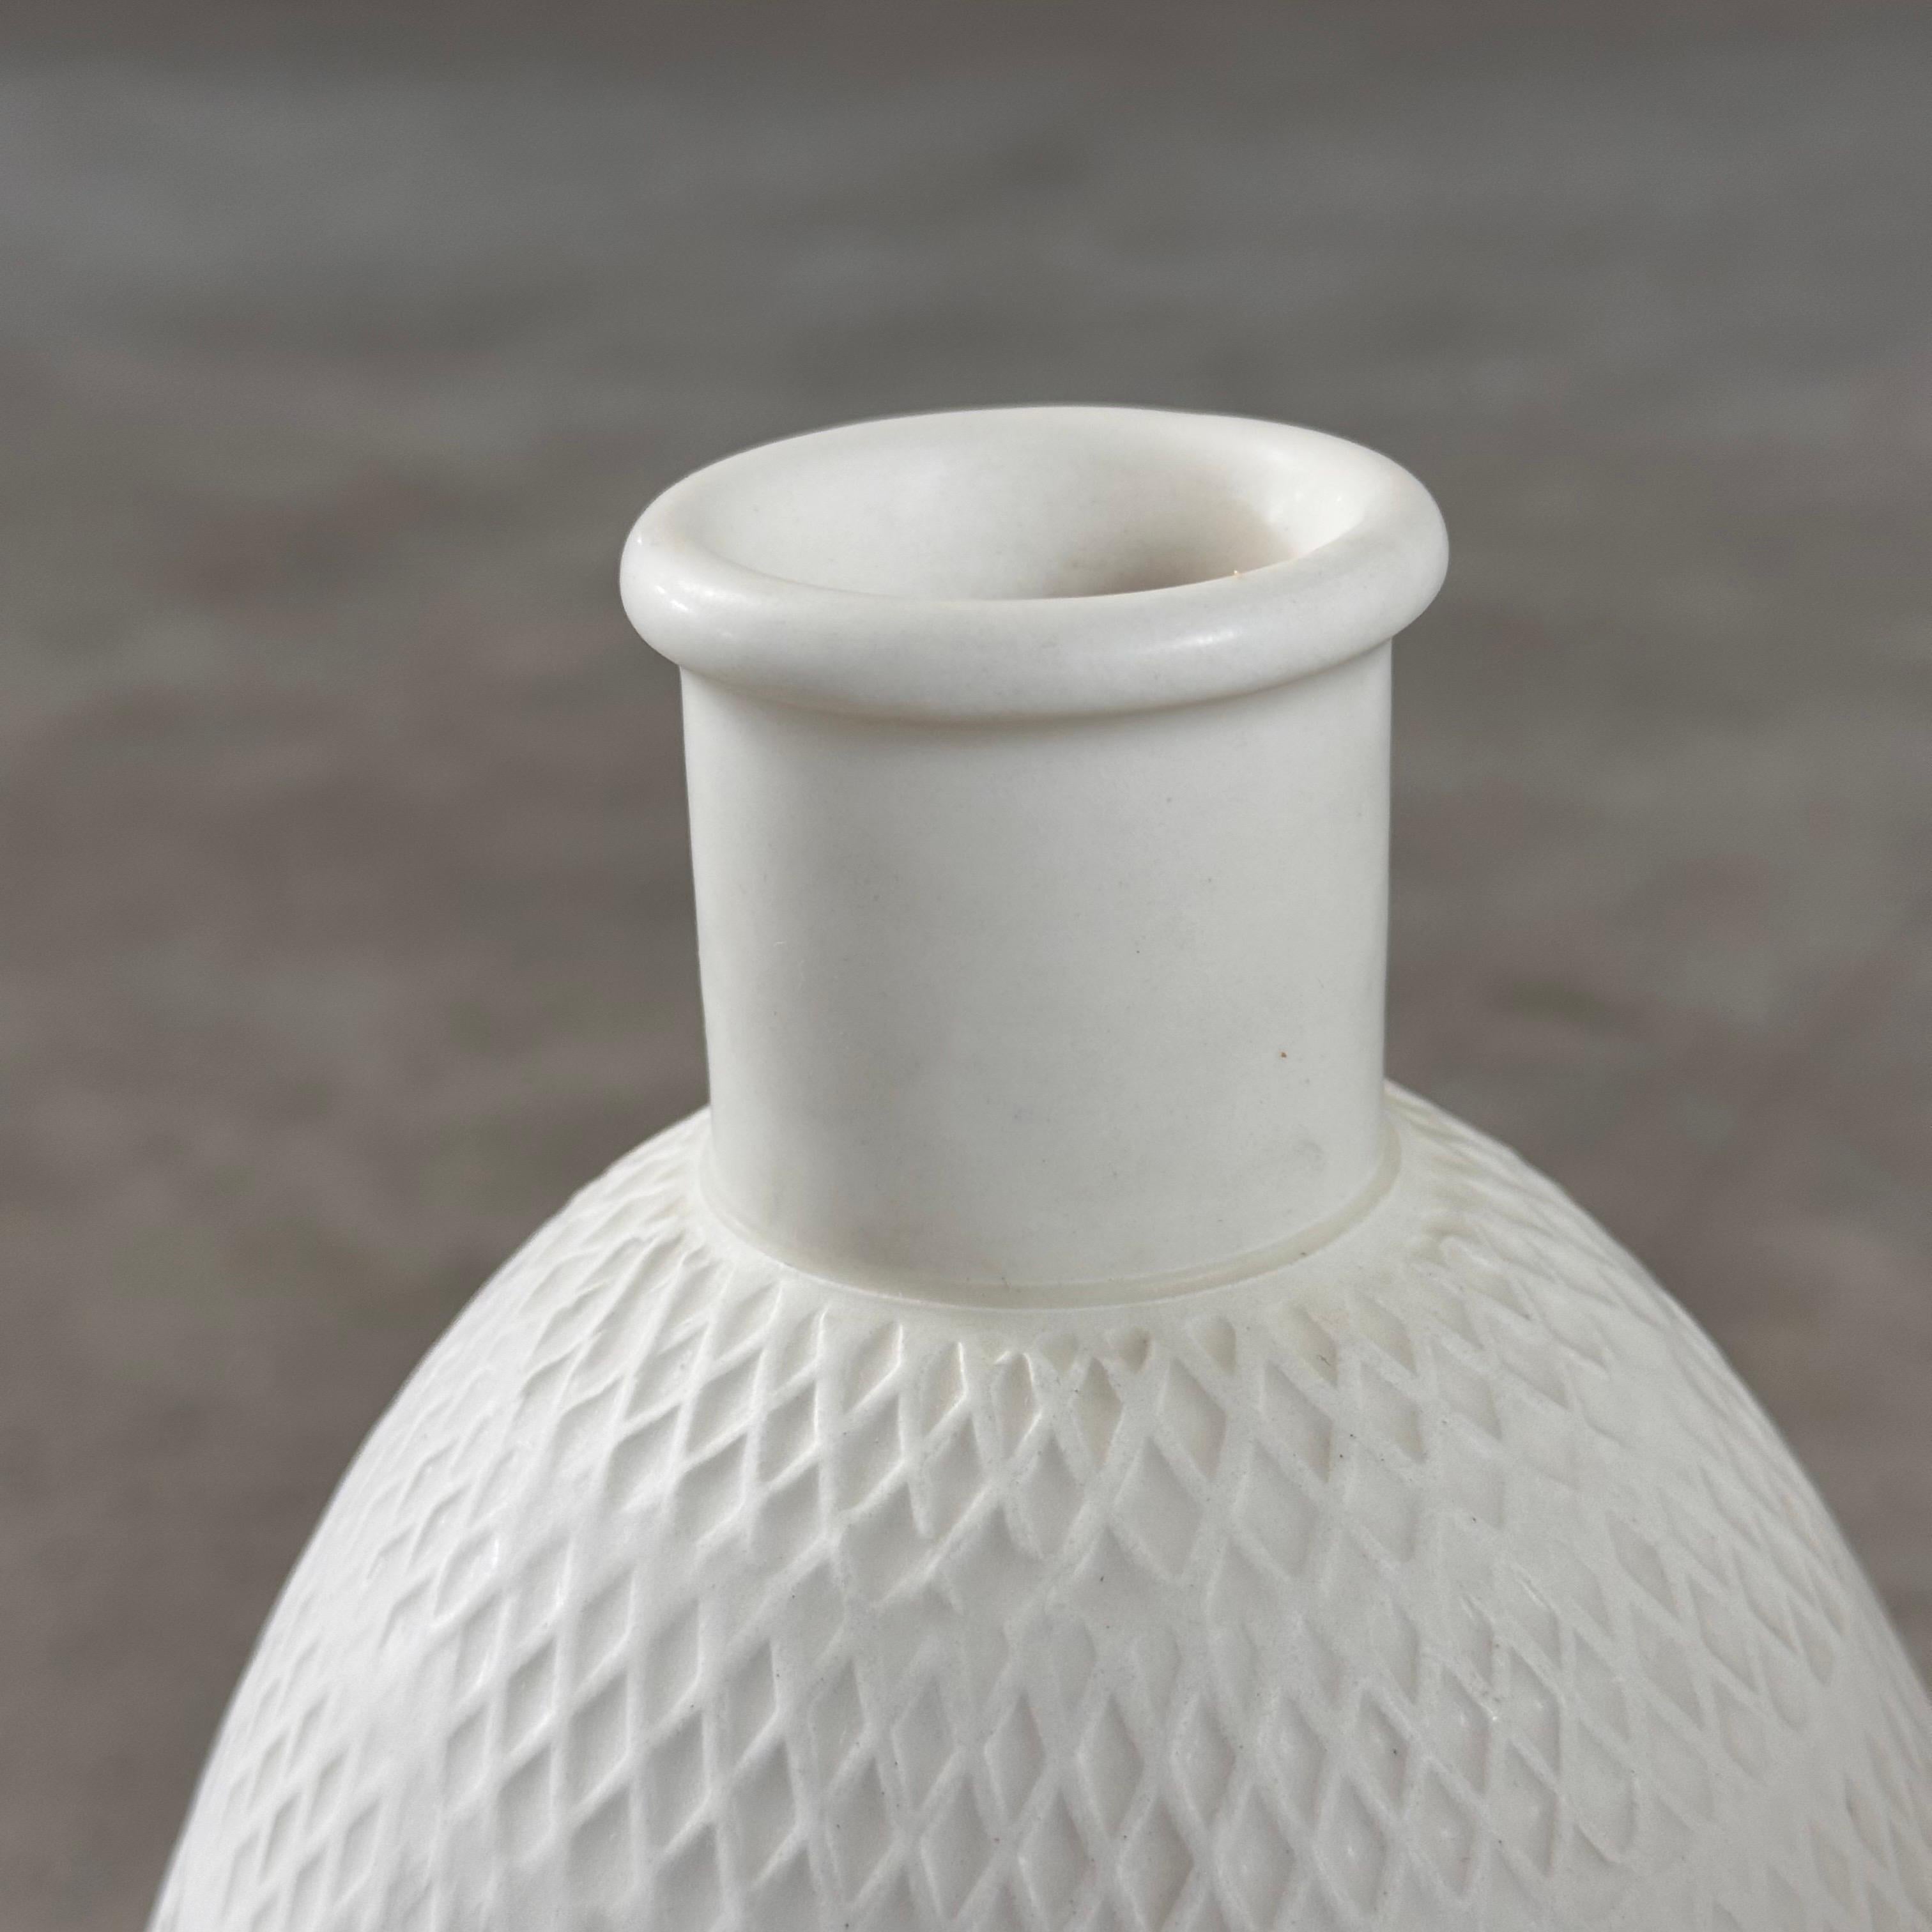 1980s Bitossi White Ceramic Set with Beautiful Texture, Pristine Condition For Sale 6